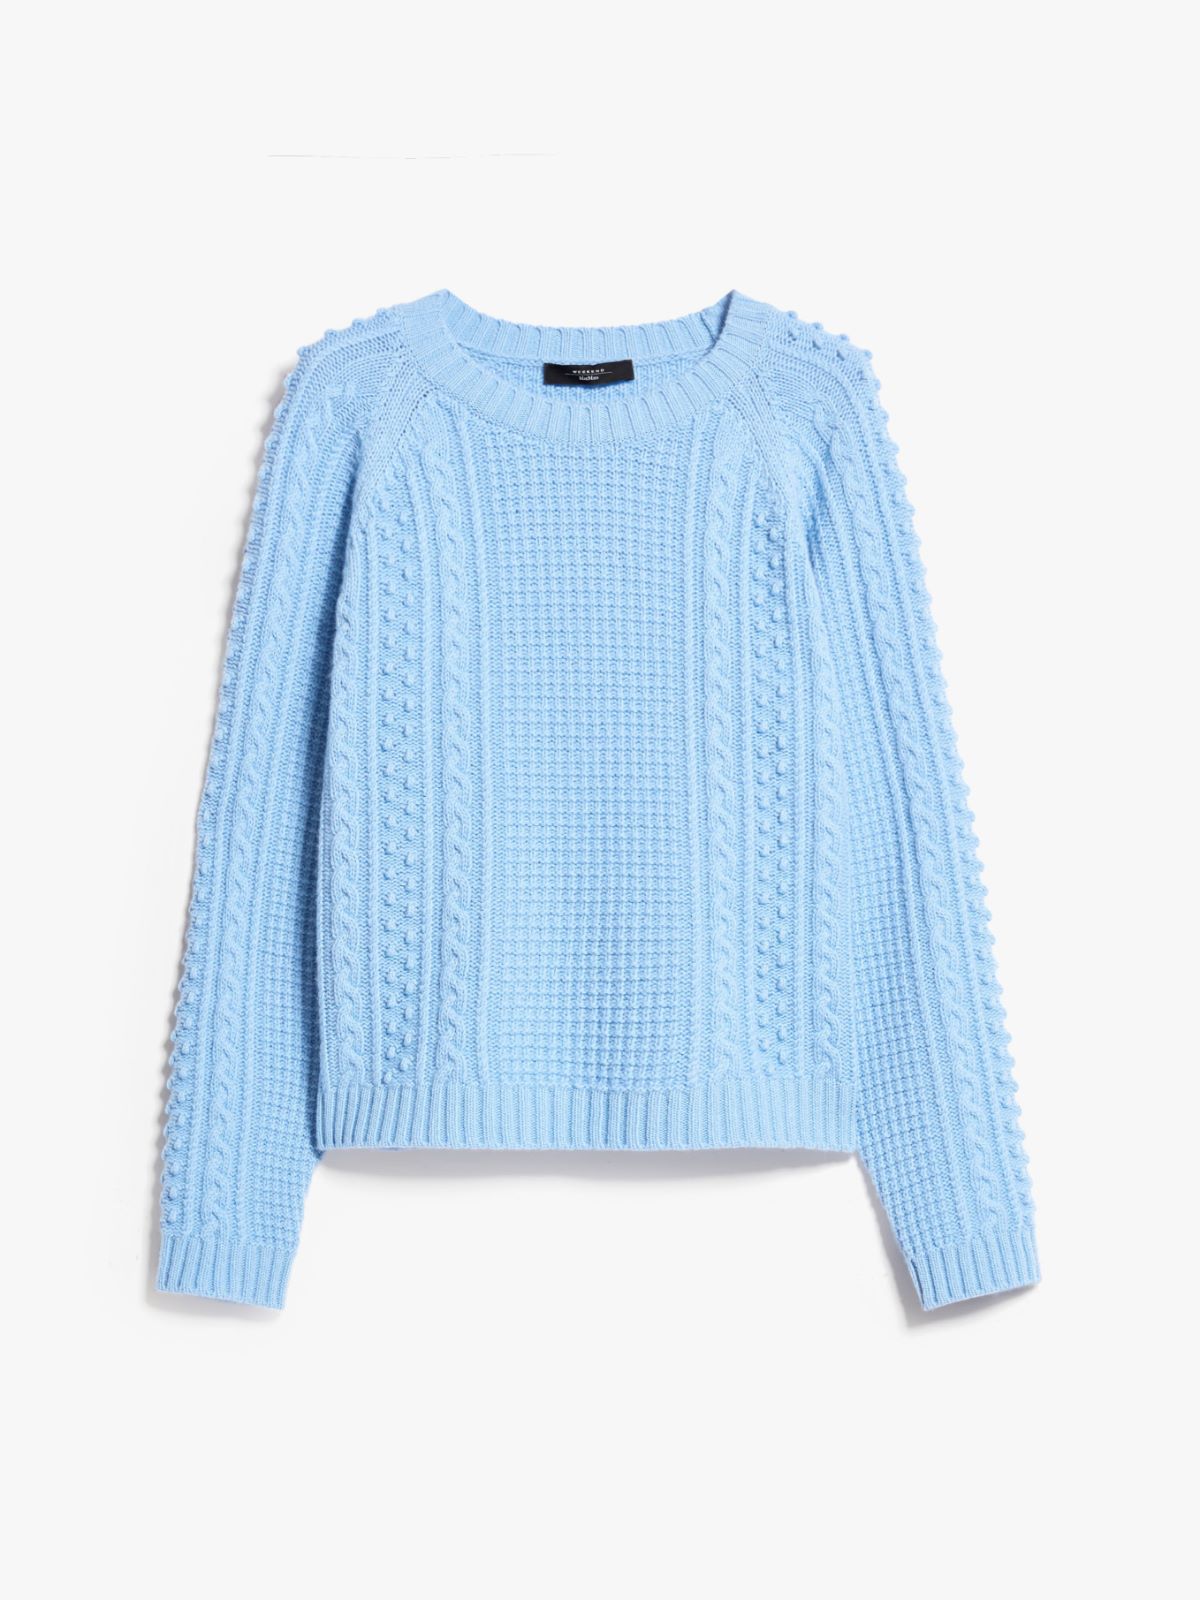 Wool yarn sweater - LIGHT BLUE - Weekend Max Mara - 6